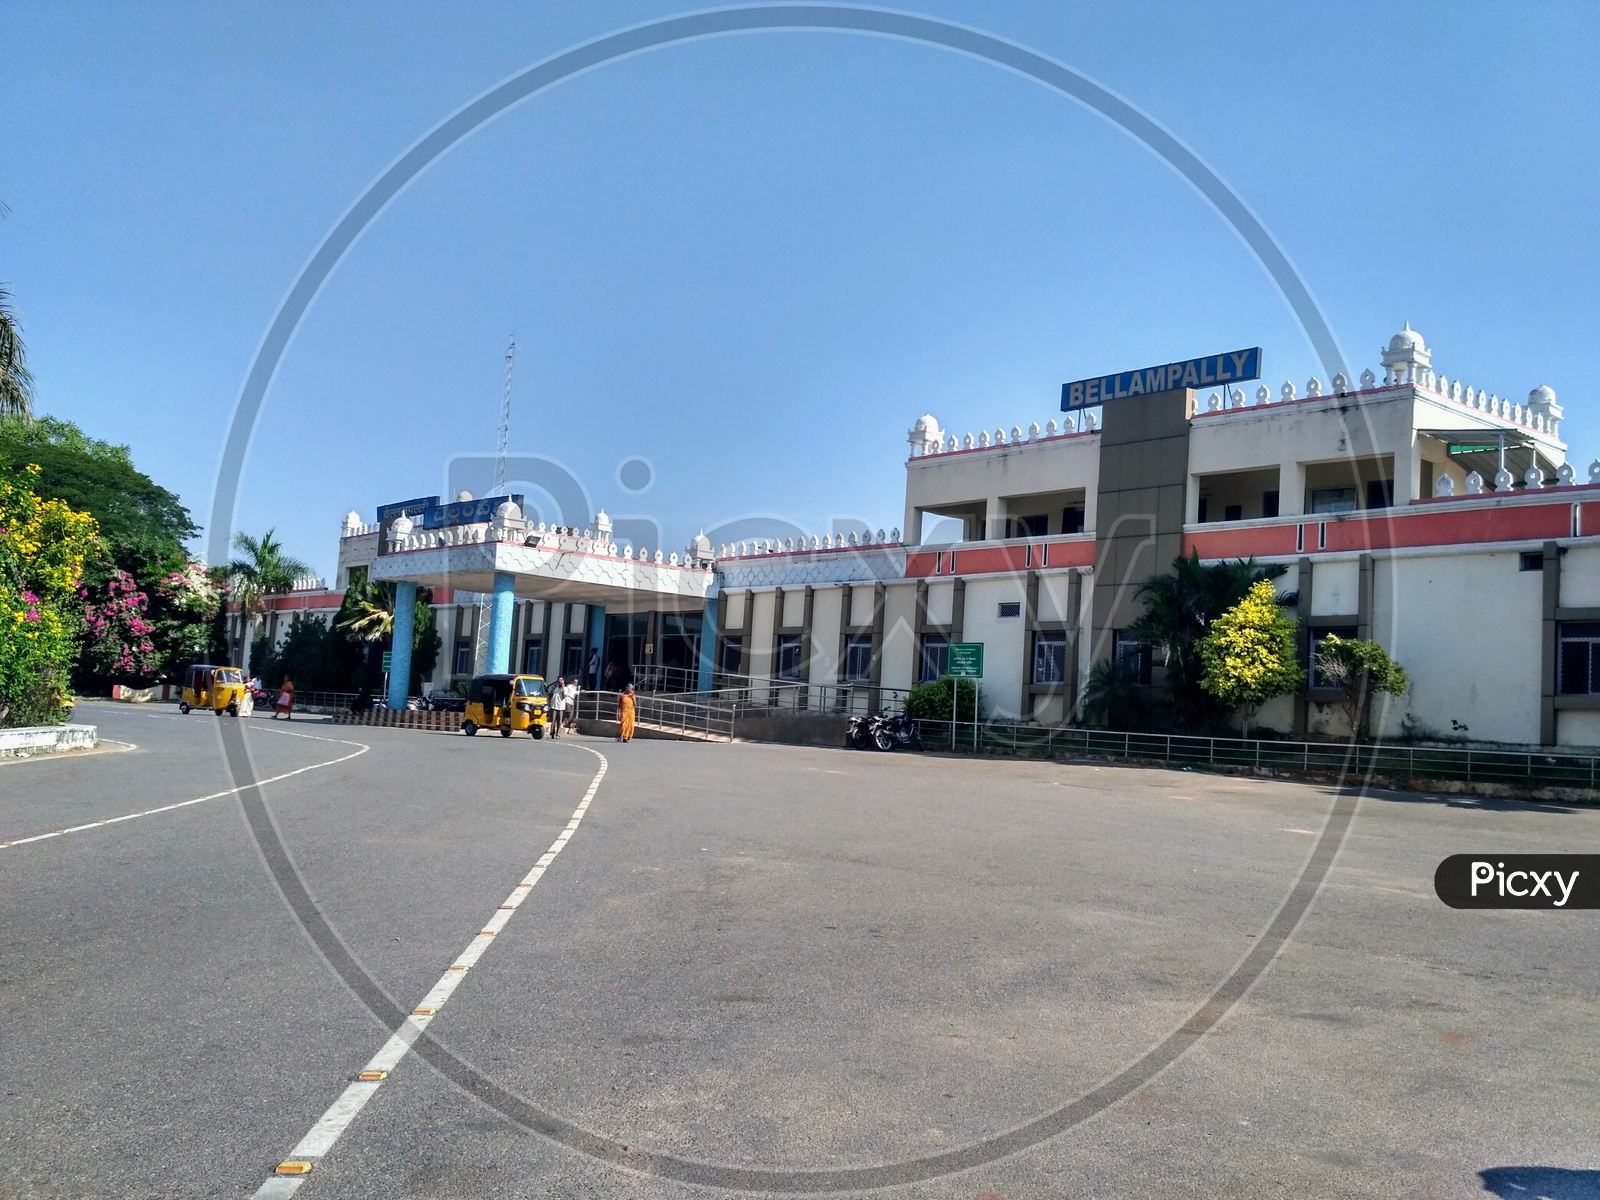 Bellampally Railway Station